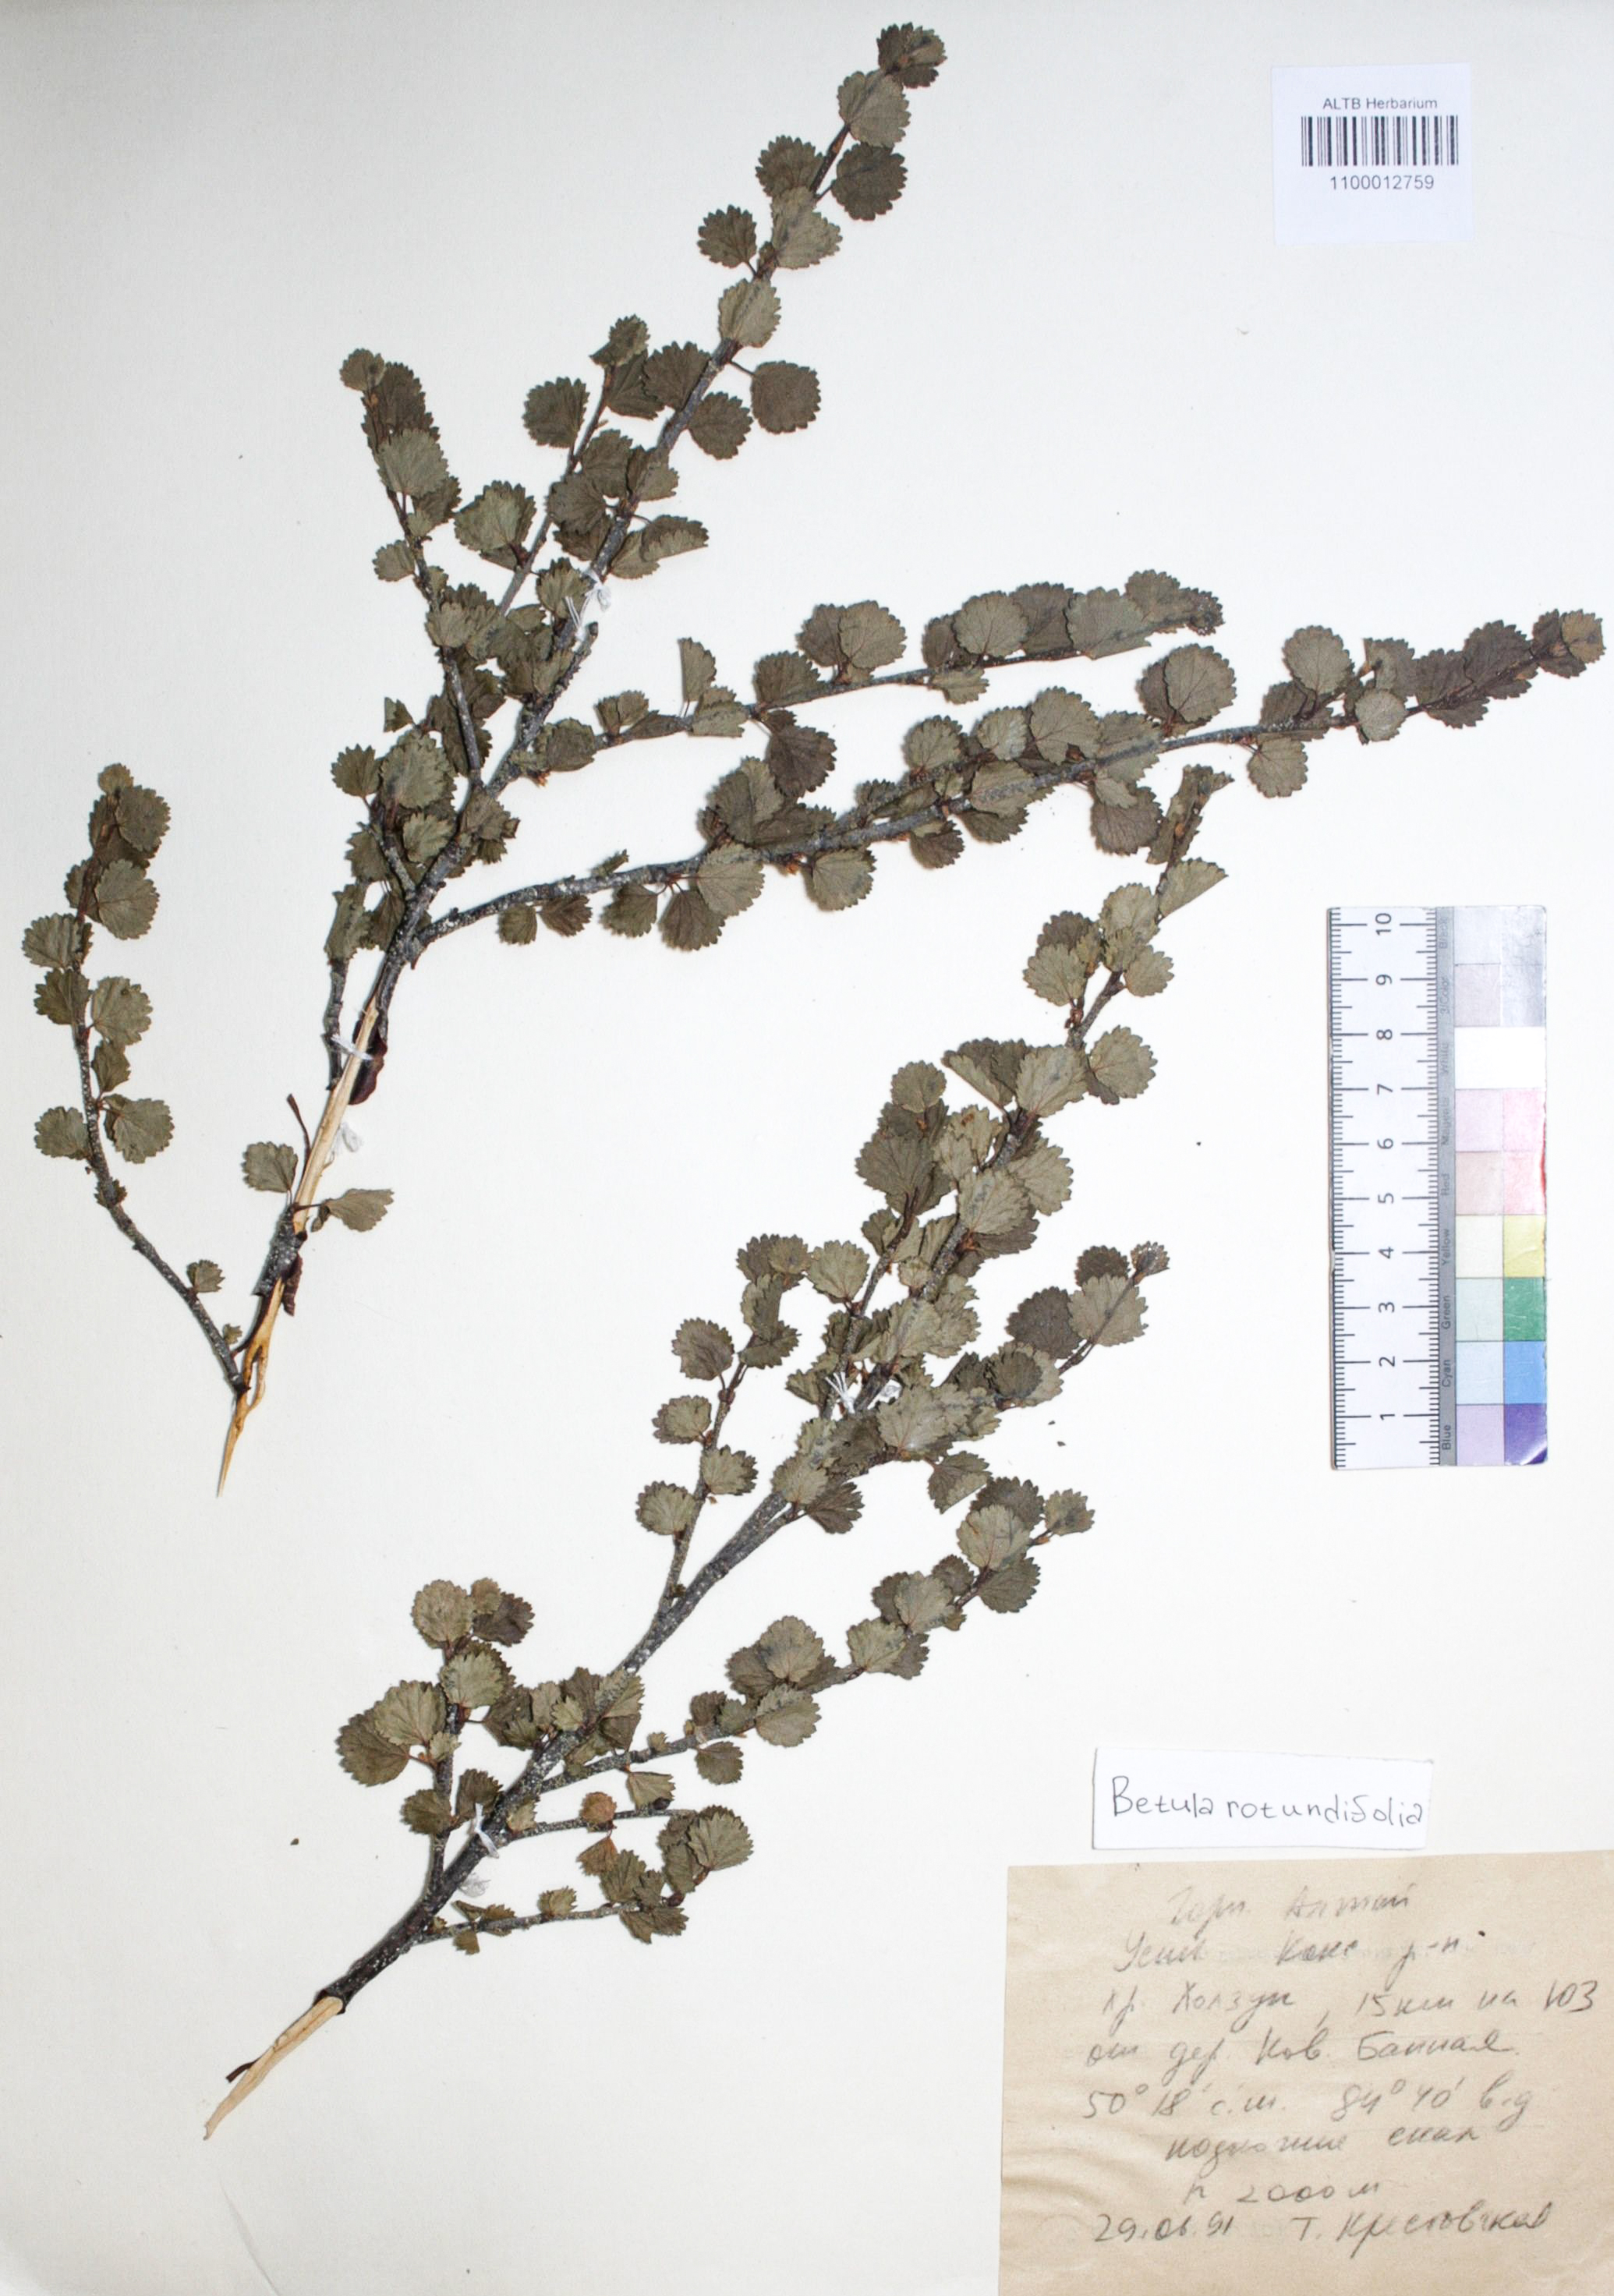 Betula nana subsp. rotundifolia (Spach) Malyschev